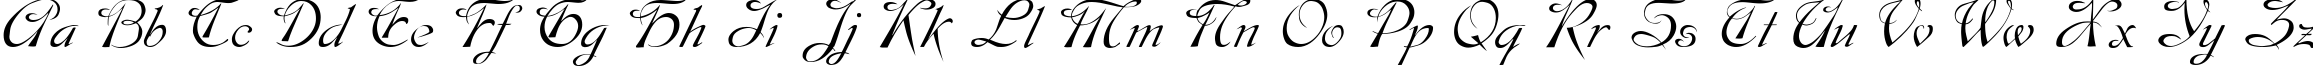 Пример написания английского алфавита шрифтом Dobkin Script